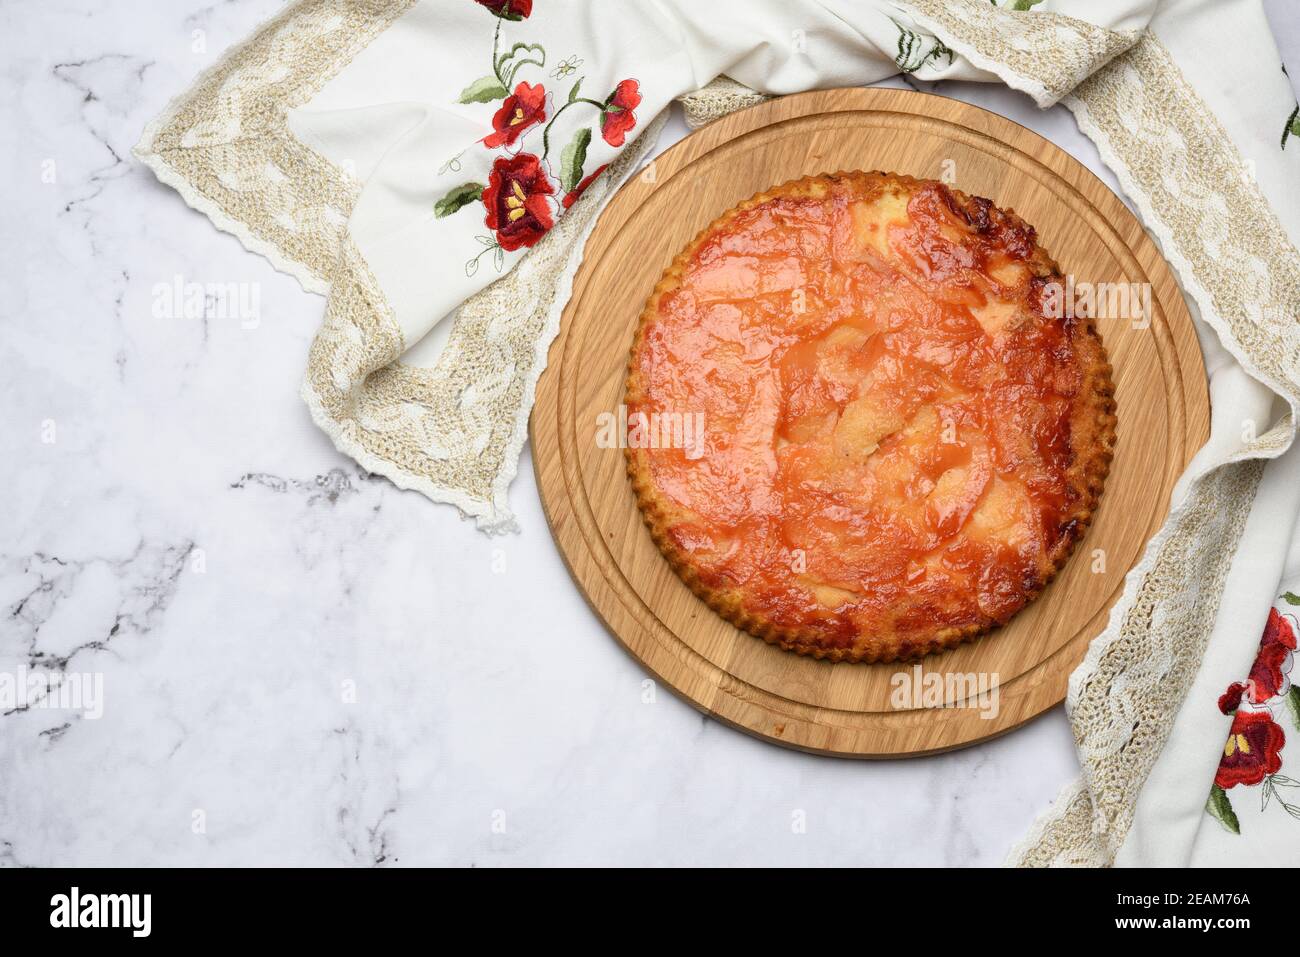 baked round apple pie on wooden board Stock Photo